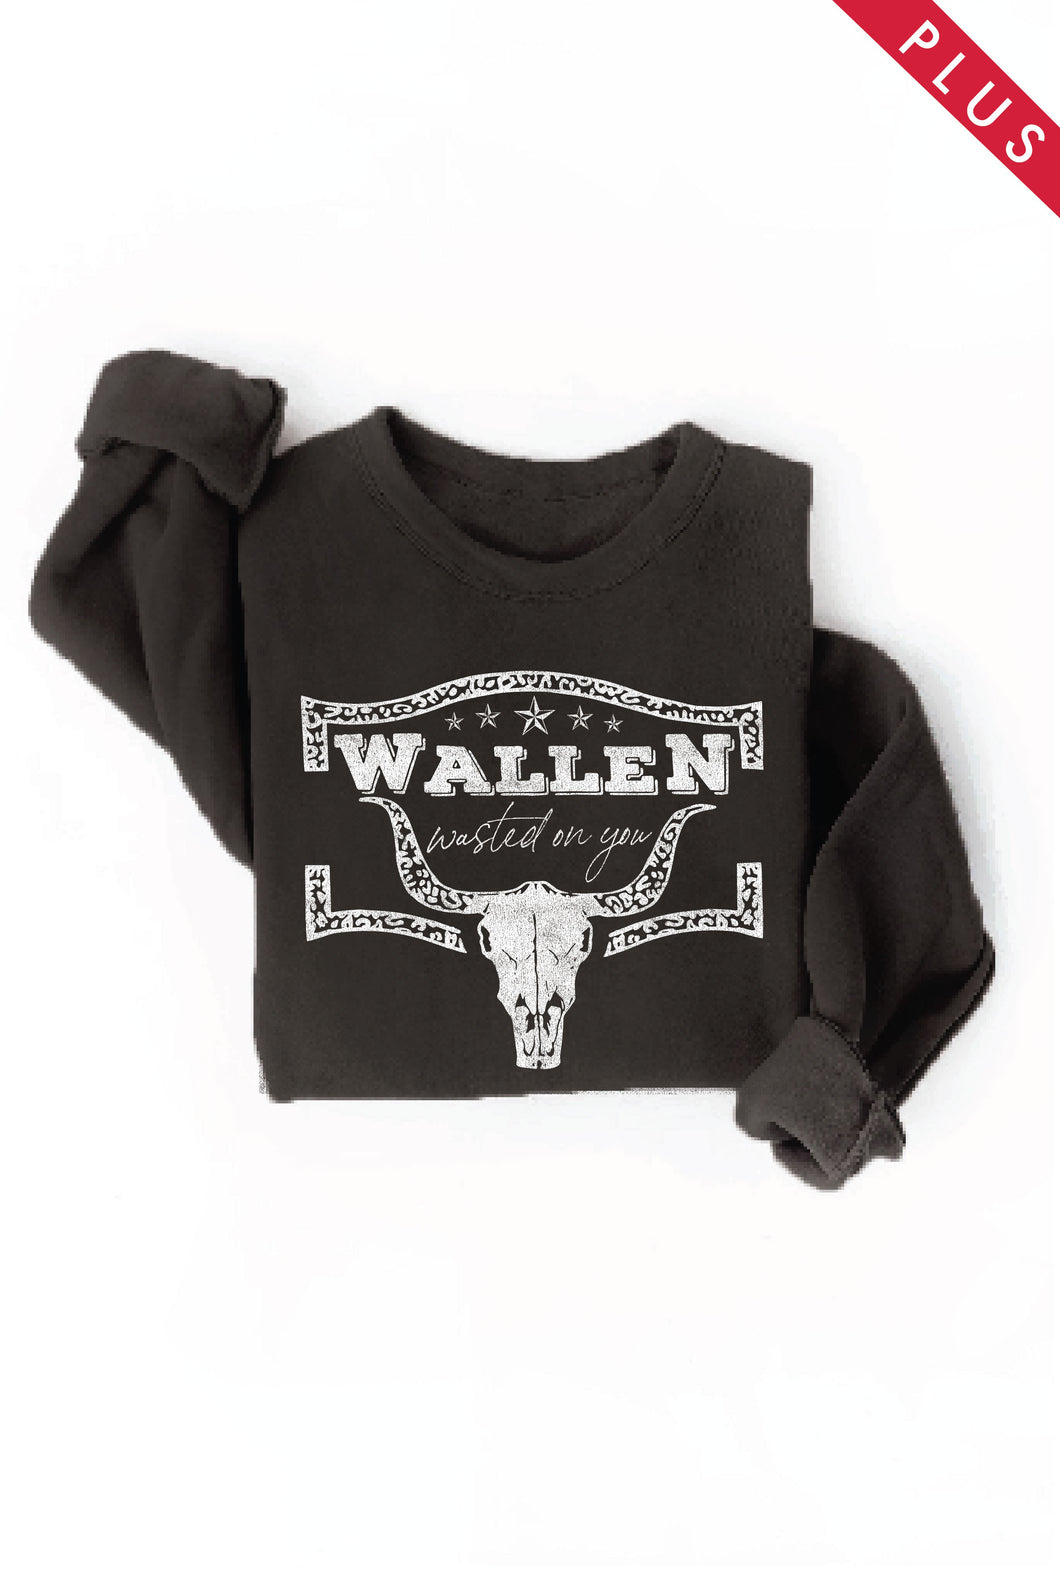 Black Wallen Wasted Graphic Oat Sweatshirt 5/3/23 6162